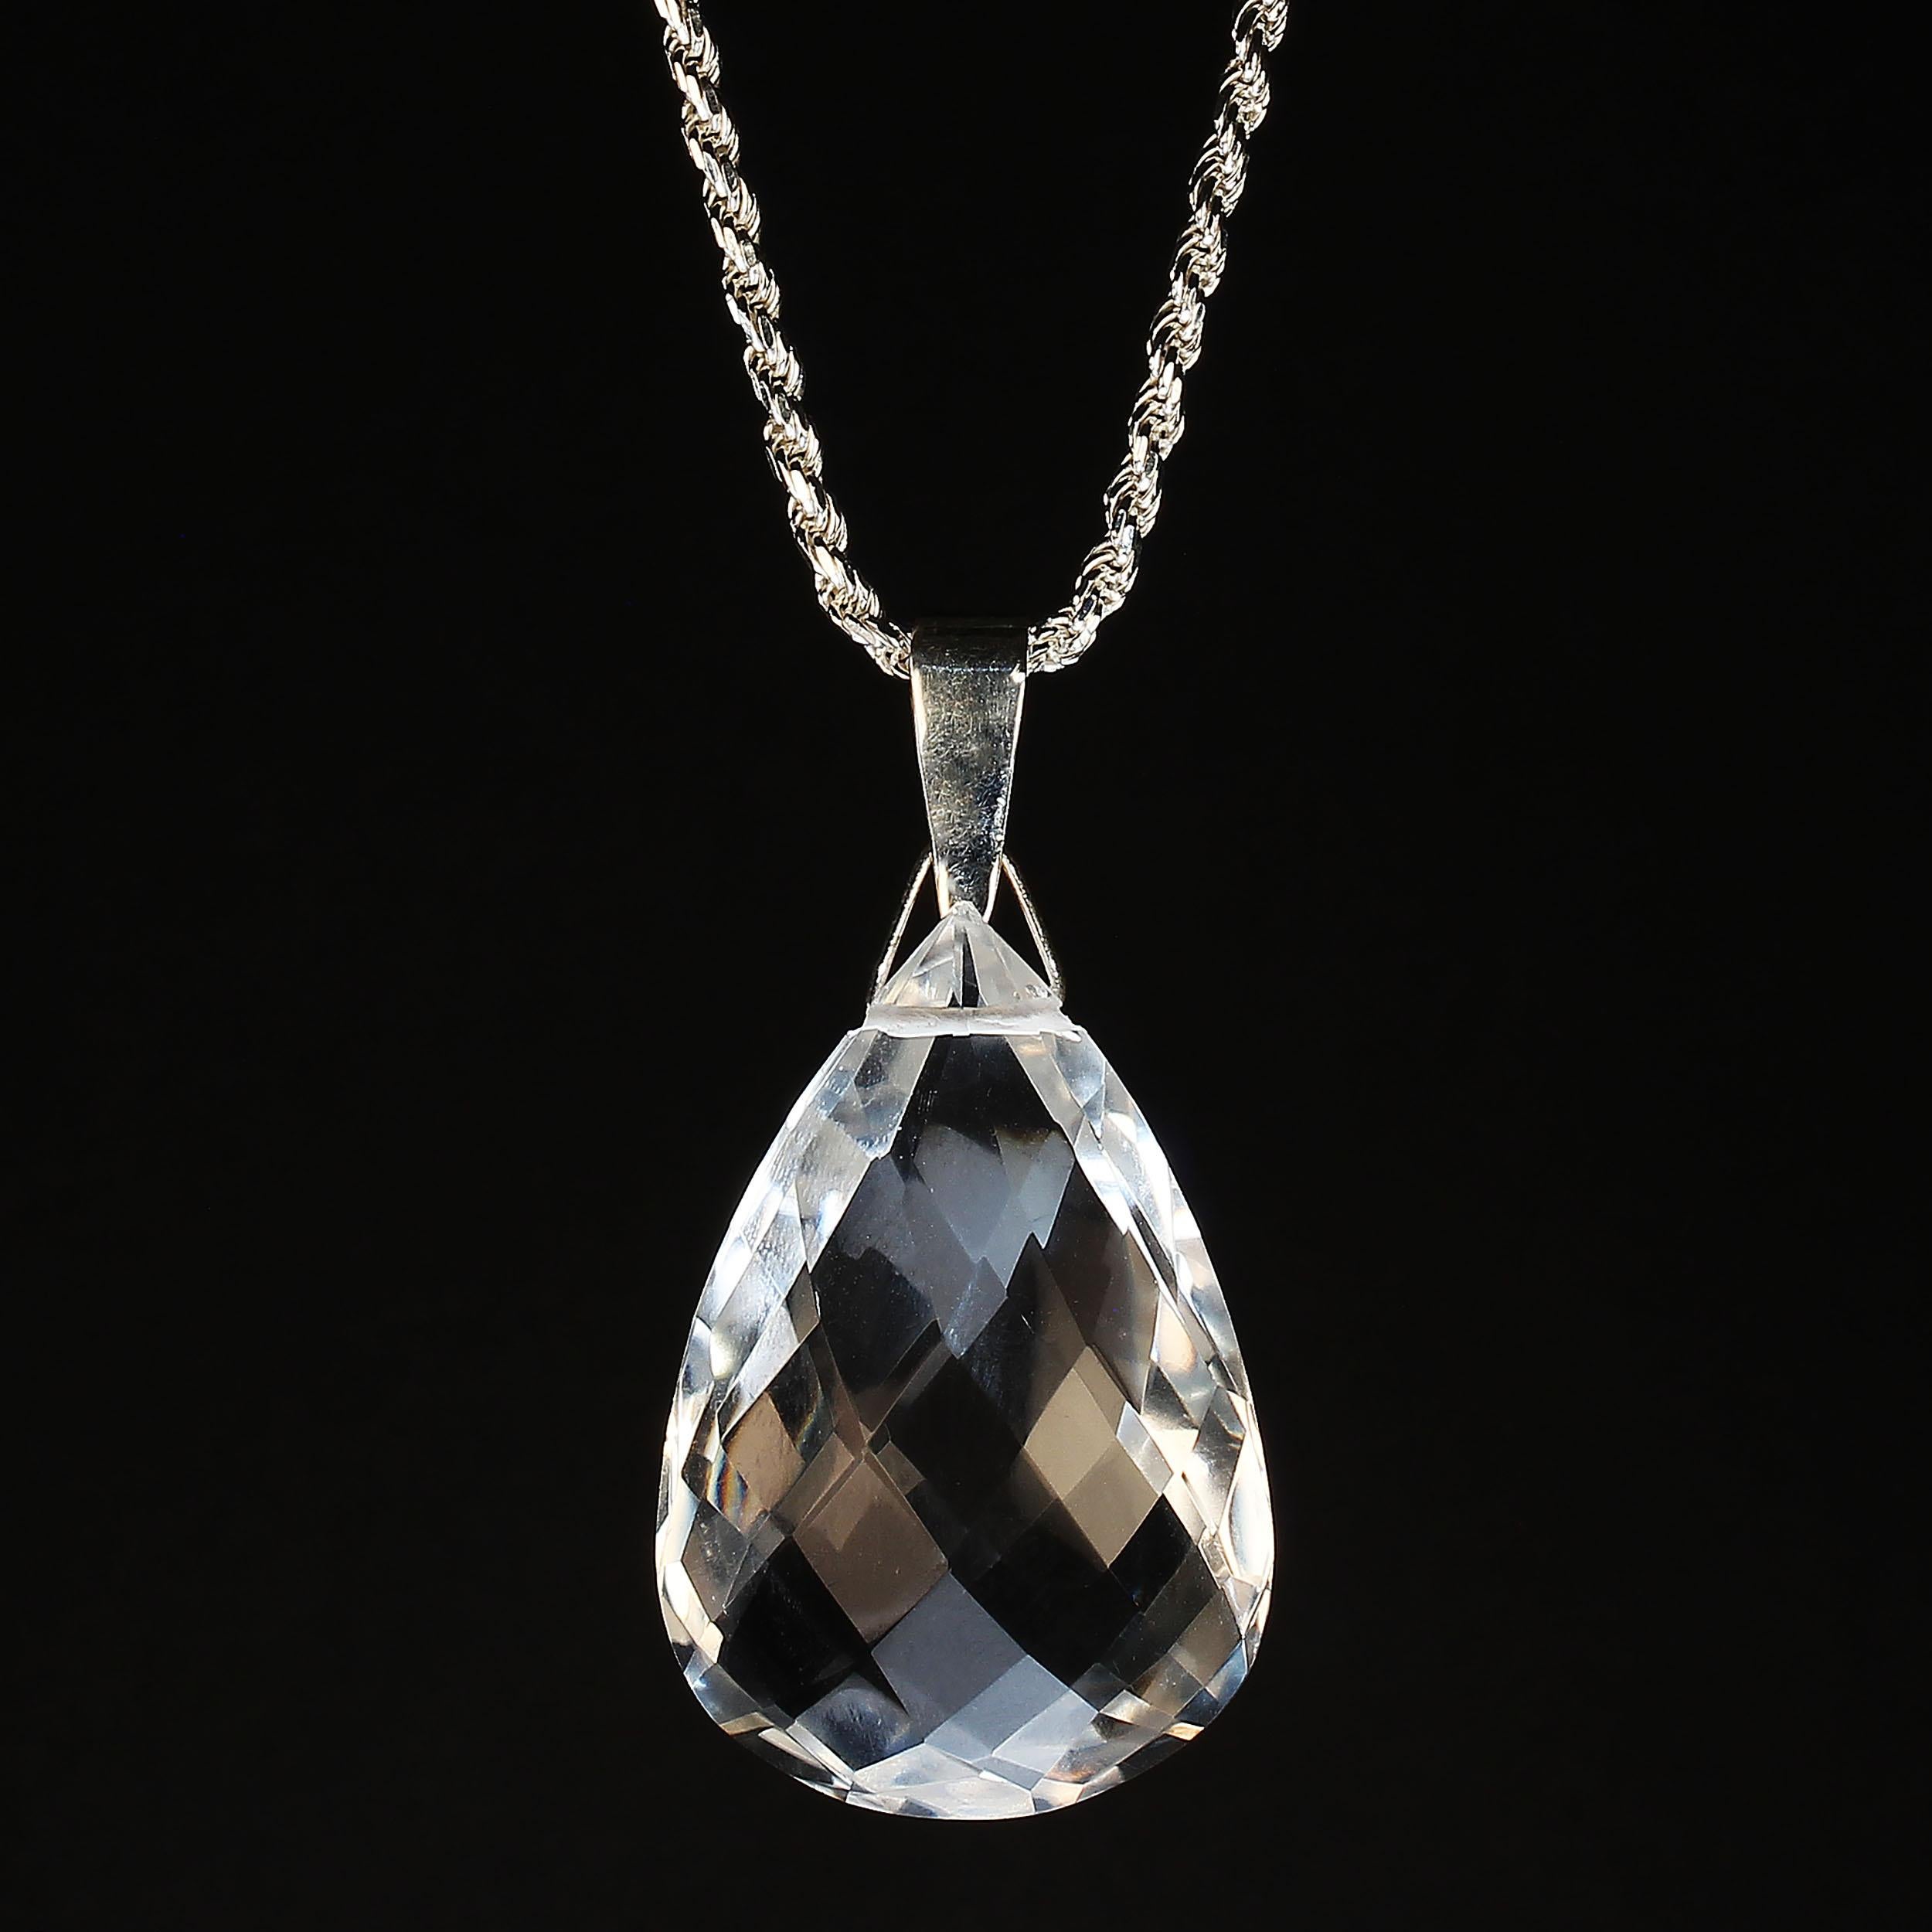 Artisan AJD Sparkling Faceted Crystal Pendant 132 Carats For Sale